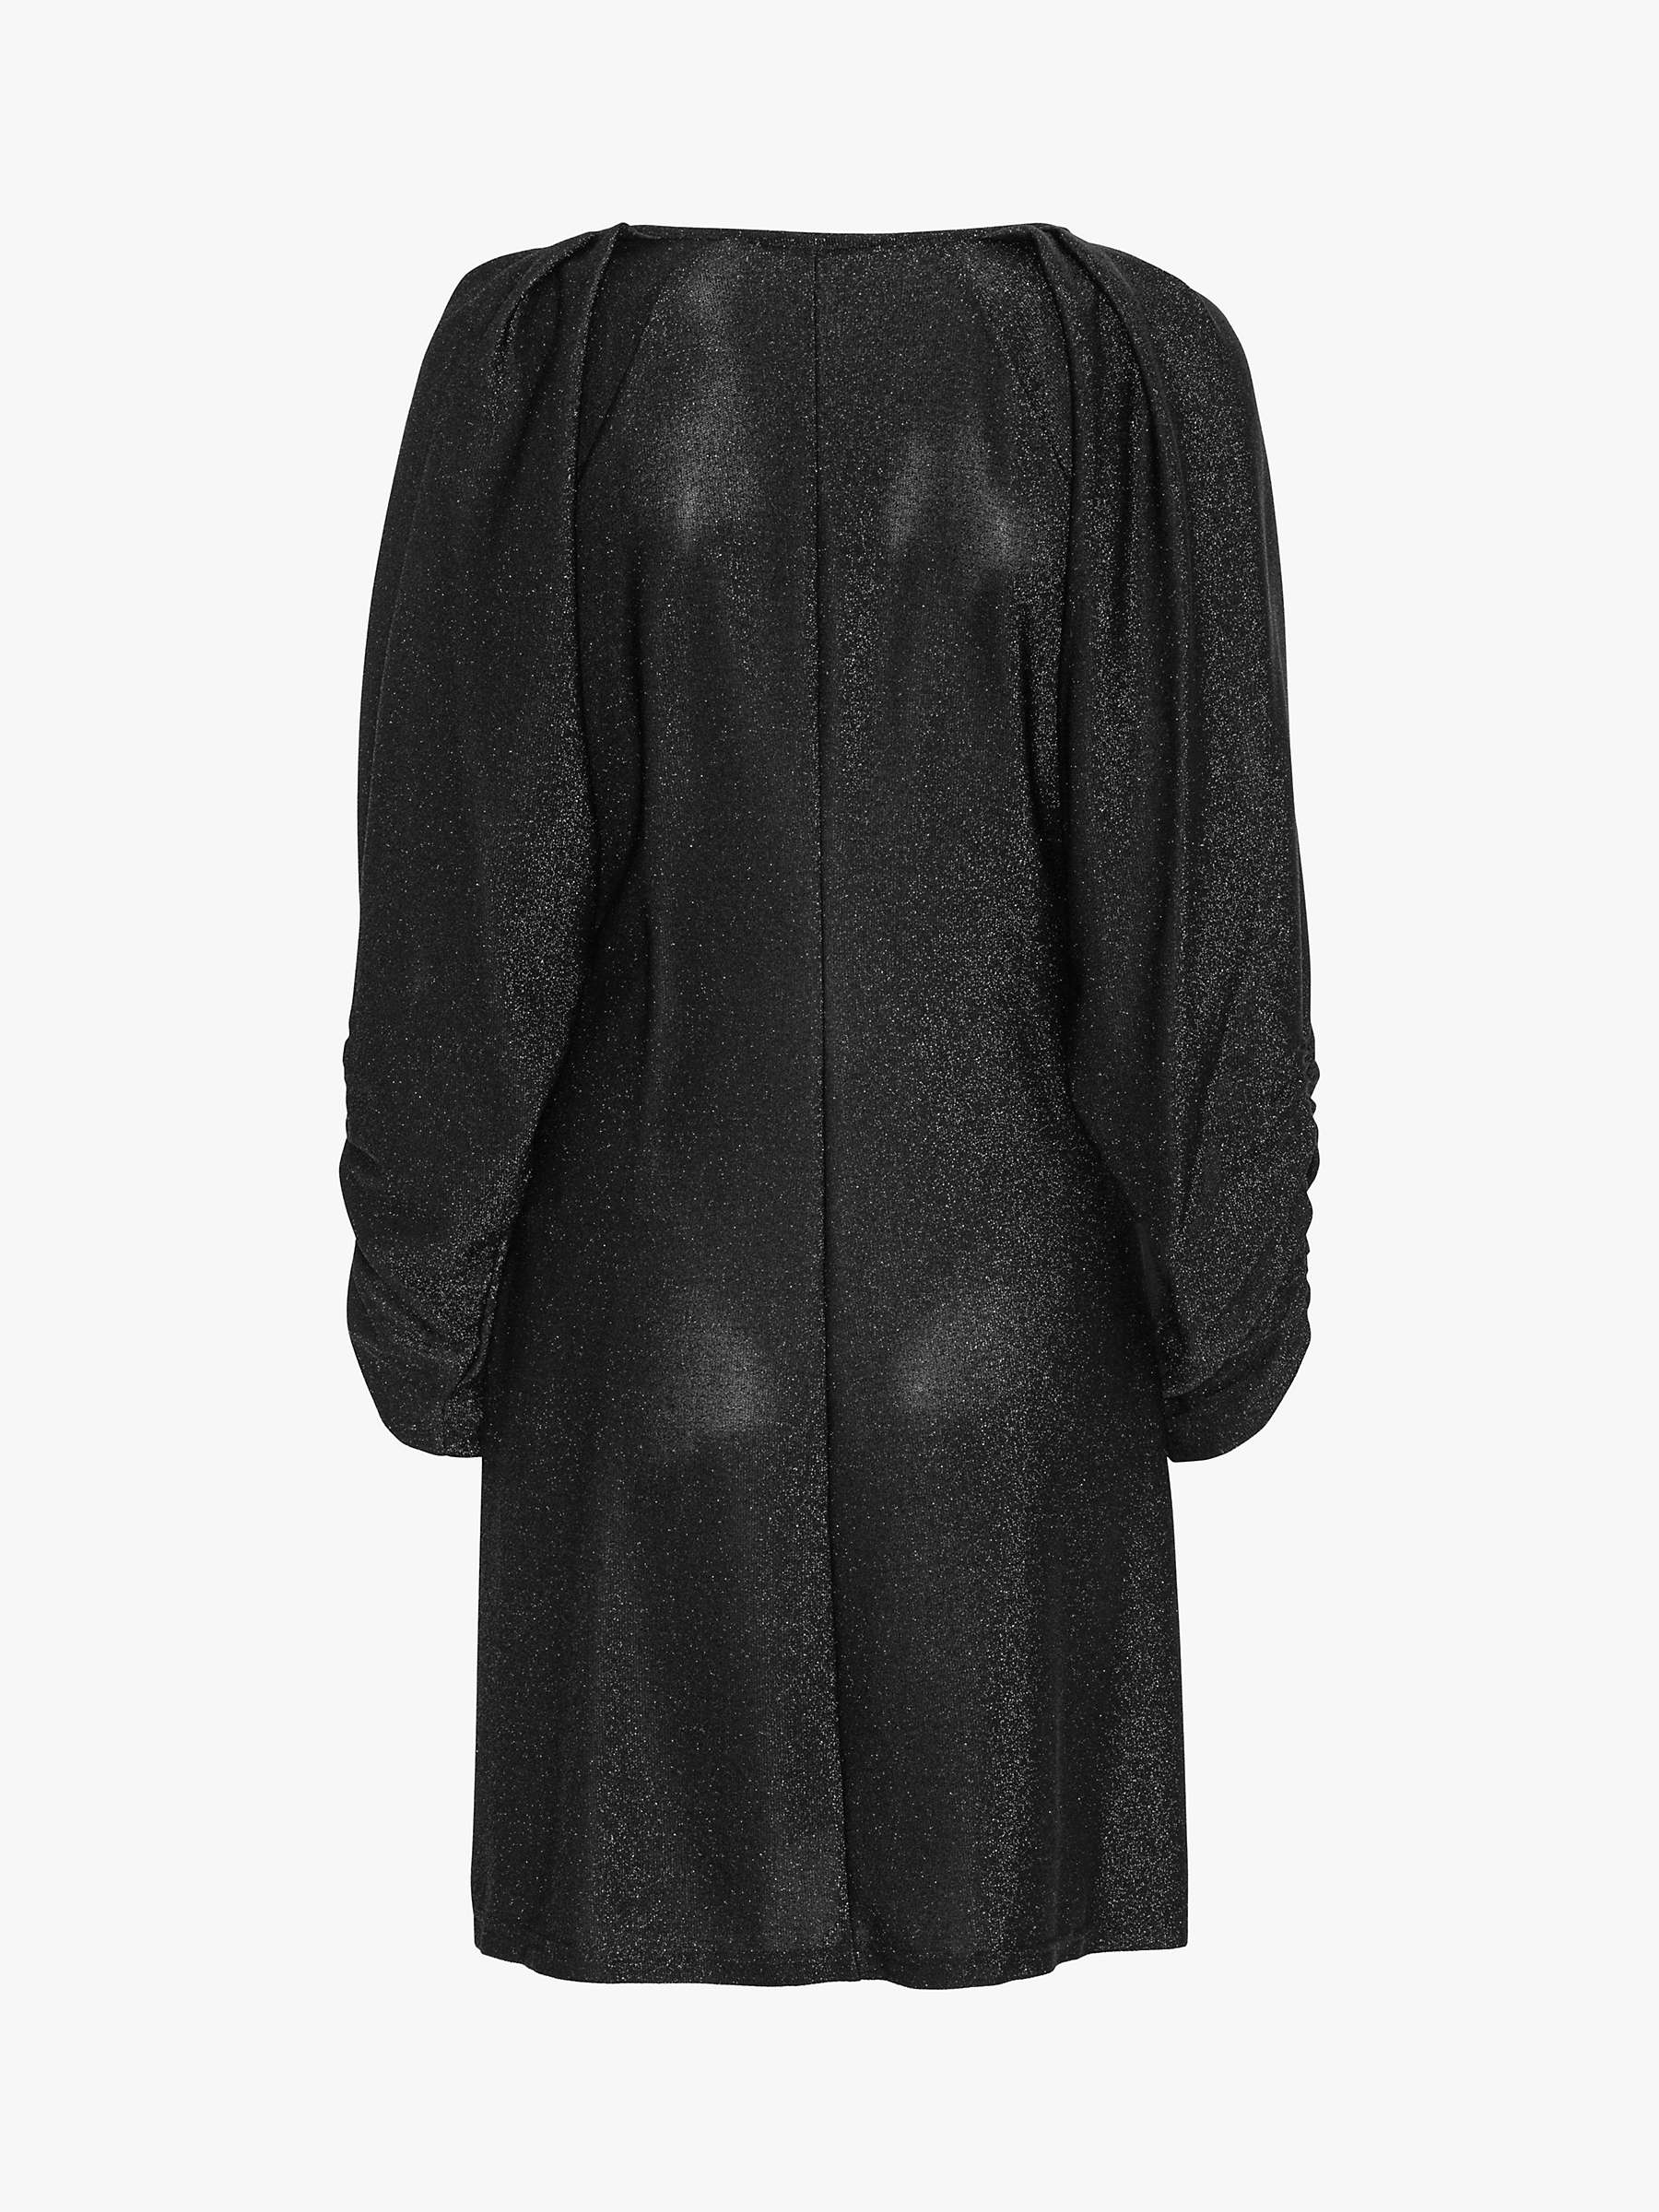 Buy A-VIEW Eva Sparkle Mini Dress, Black Online at johnlewis.com